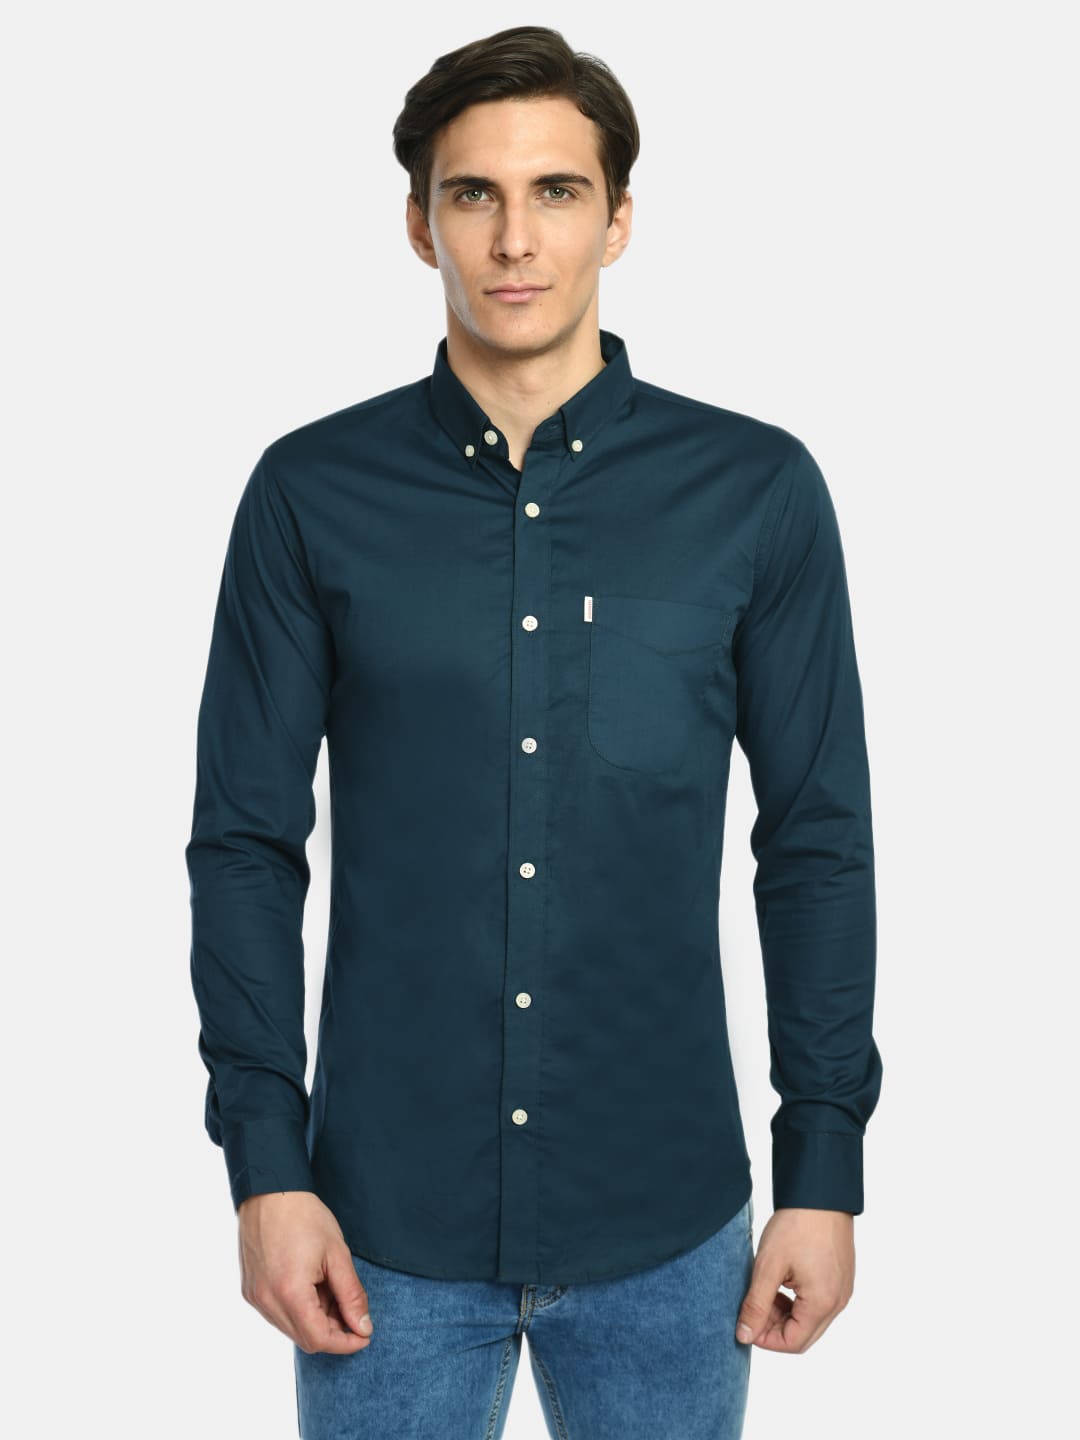 Men's Teal Blue Solid Regular Fit Casual Shirt